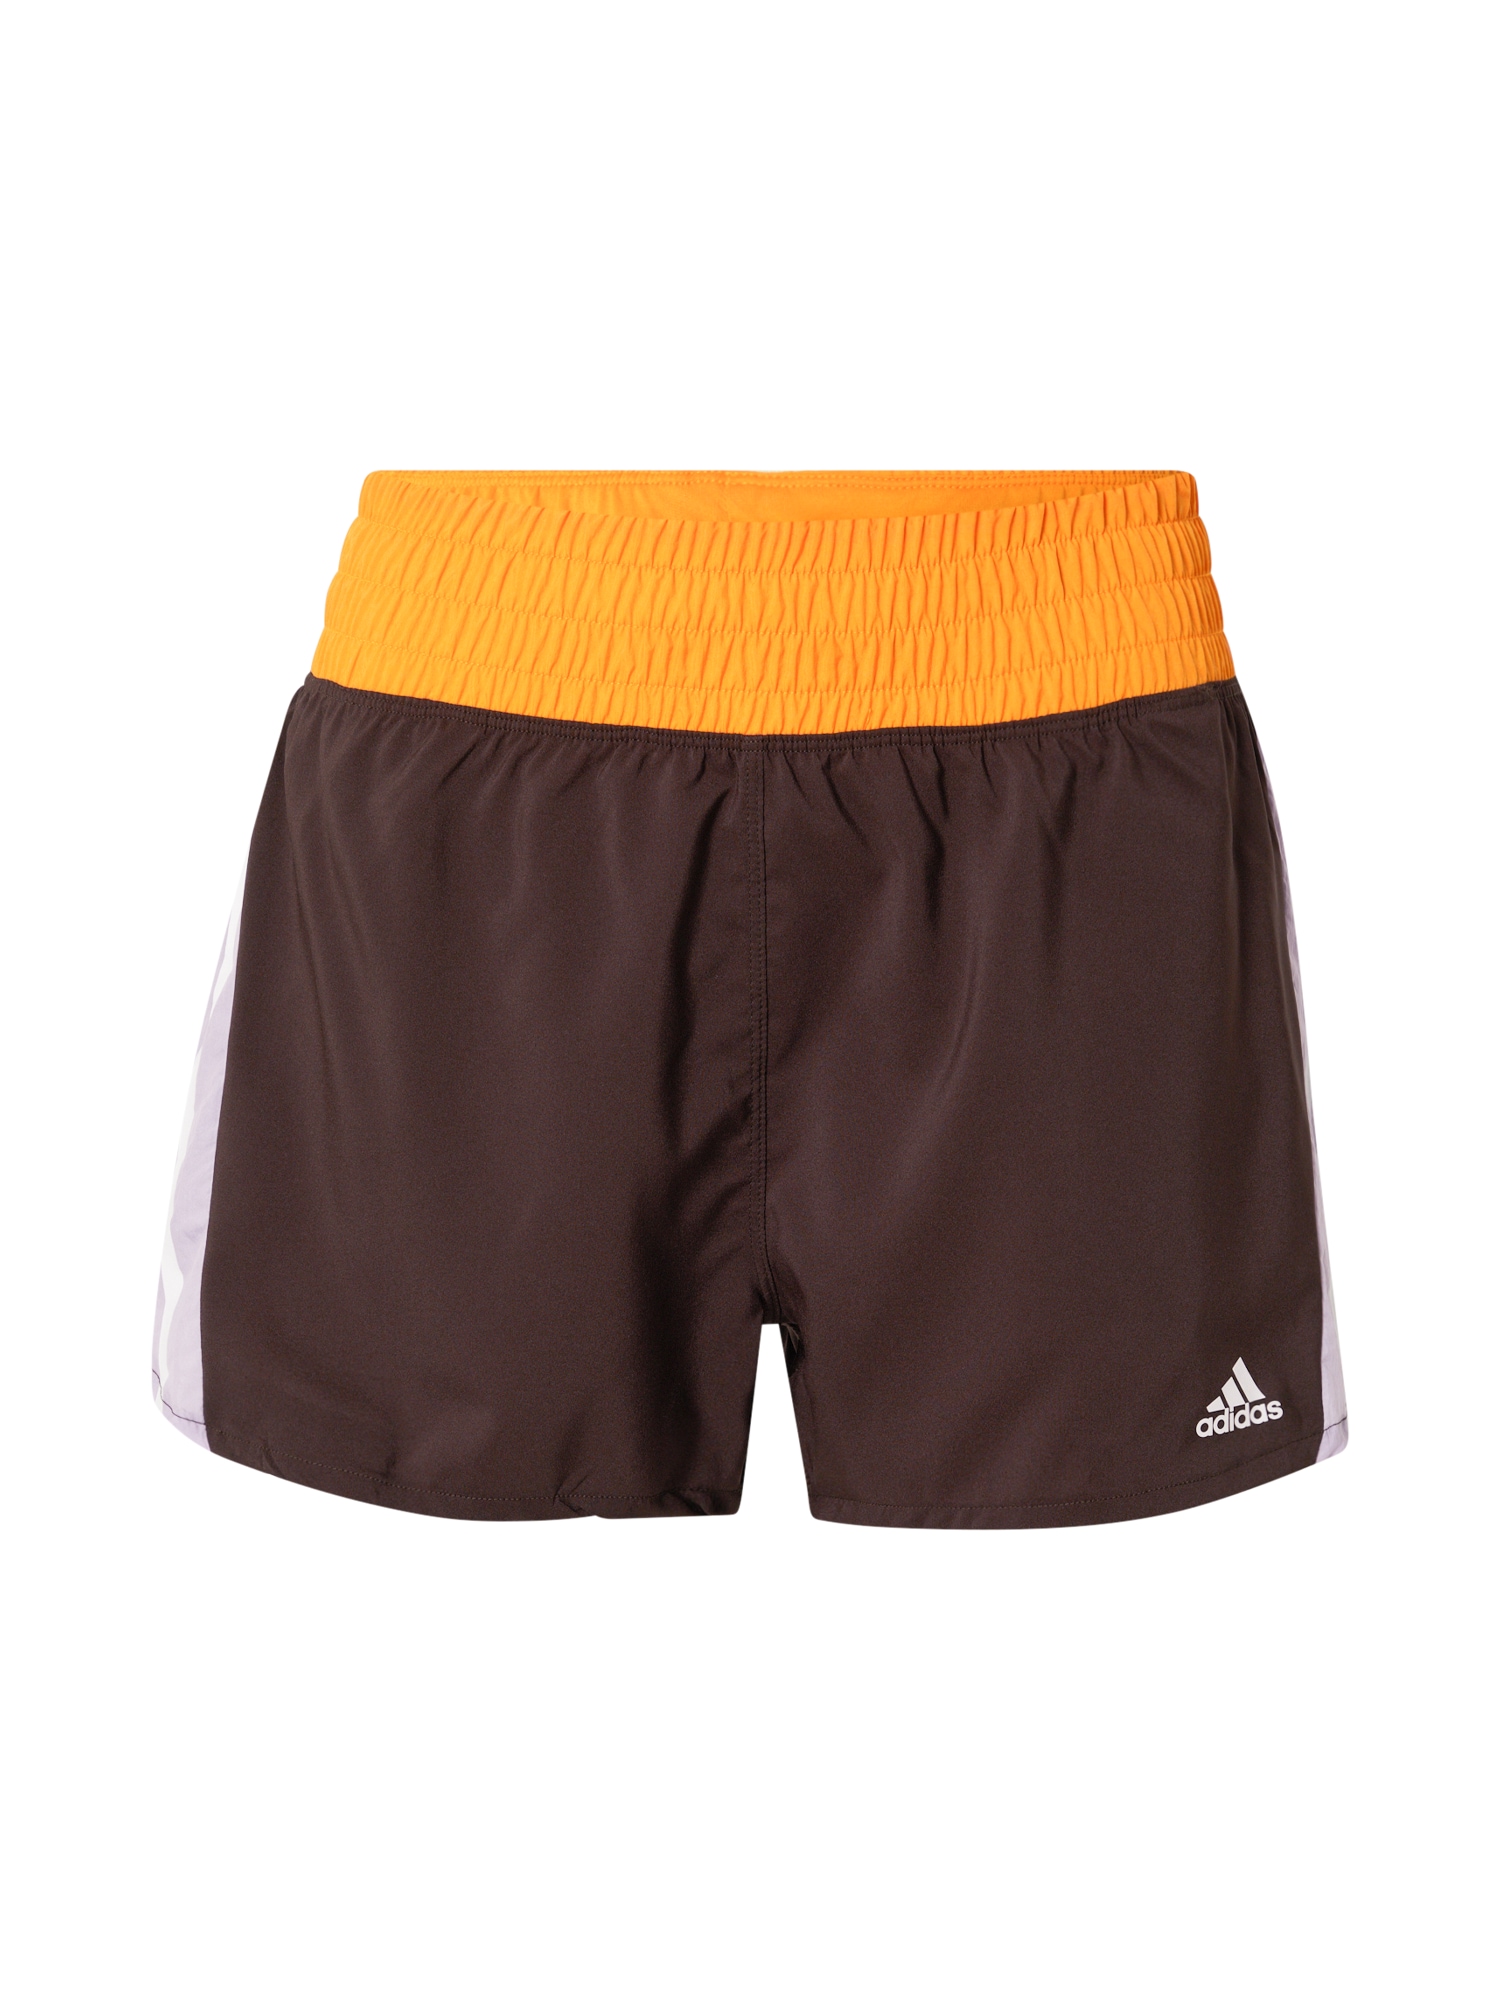 ADIDAS PERFORMANCE Športne hlače  temno rjava / majnica / svetlo oranžna / bela